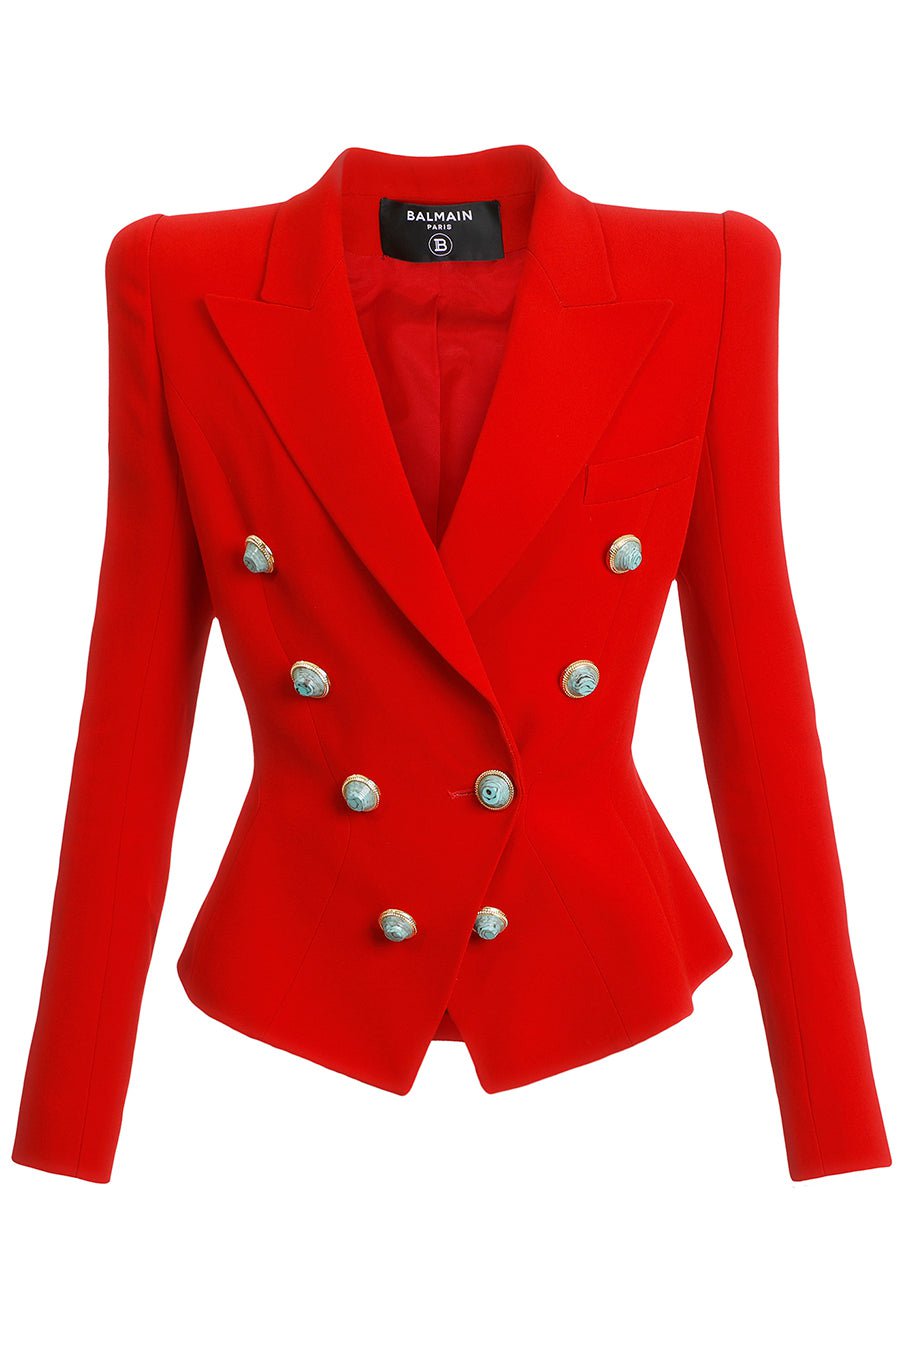 BALMAIN-8 Button Jacket - Rouge-